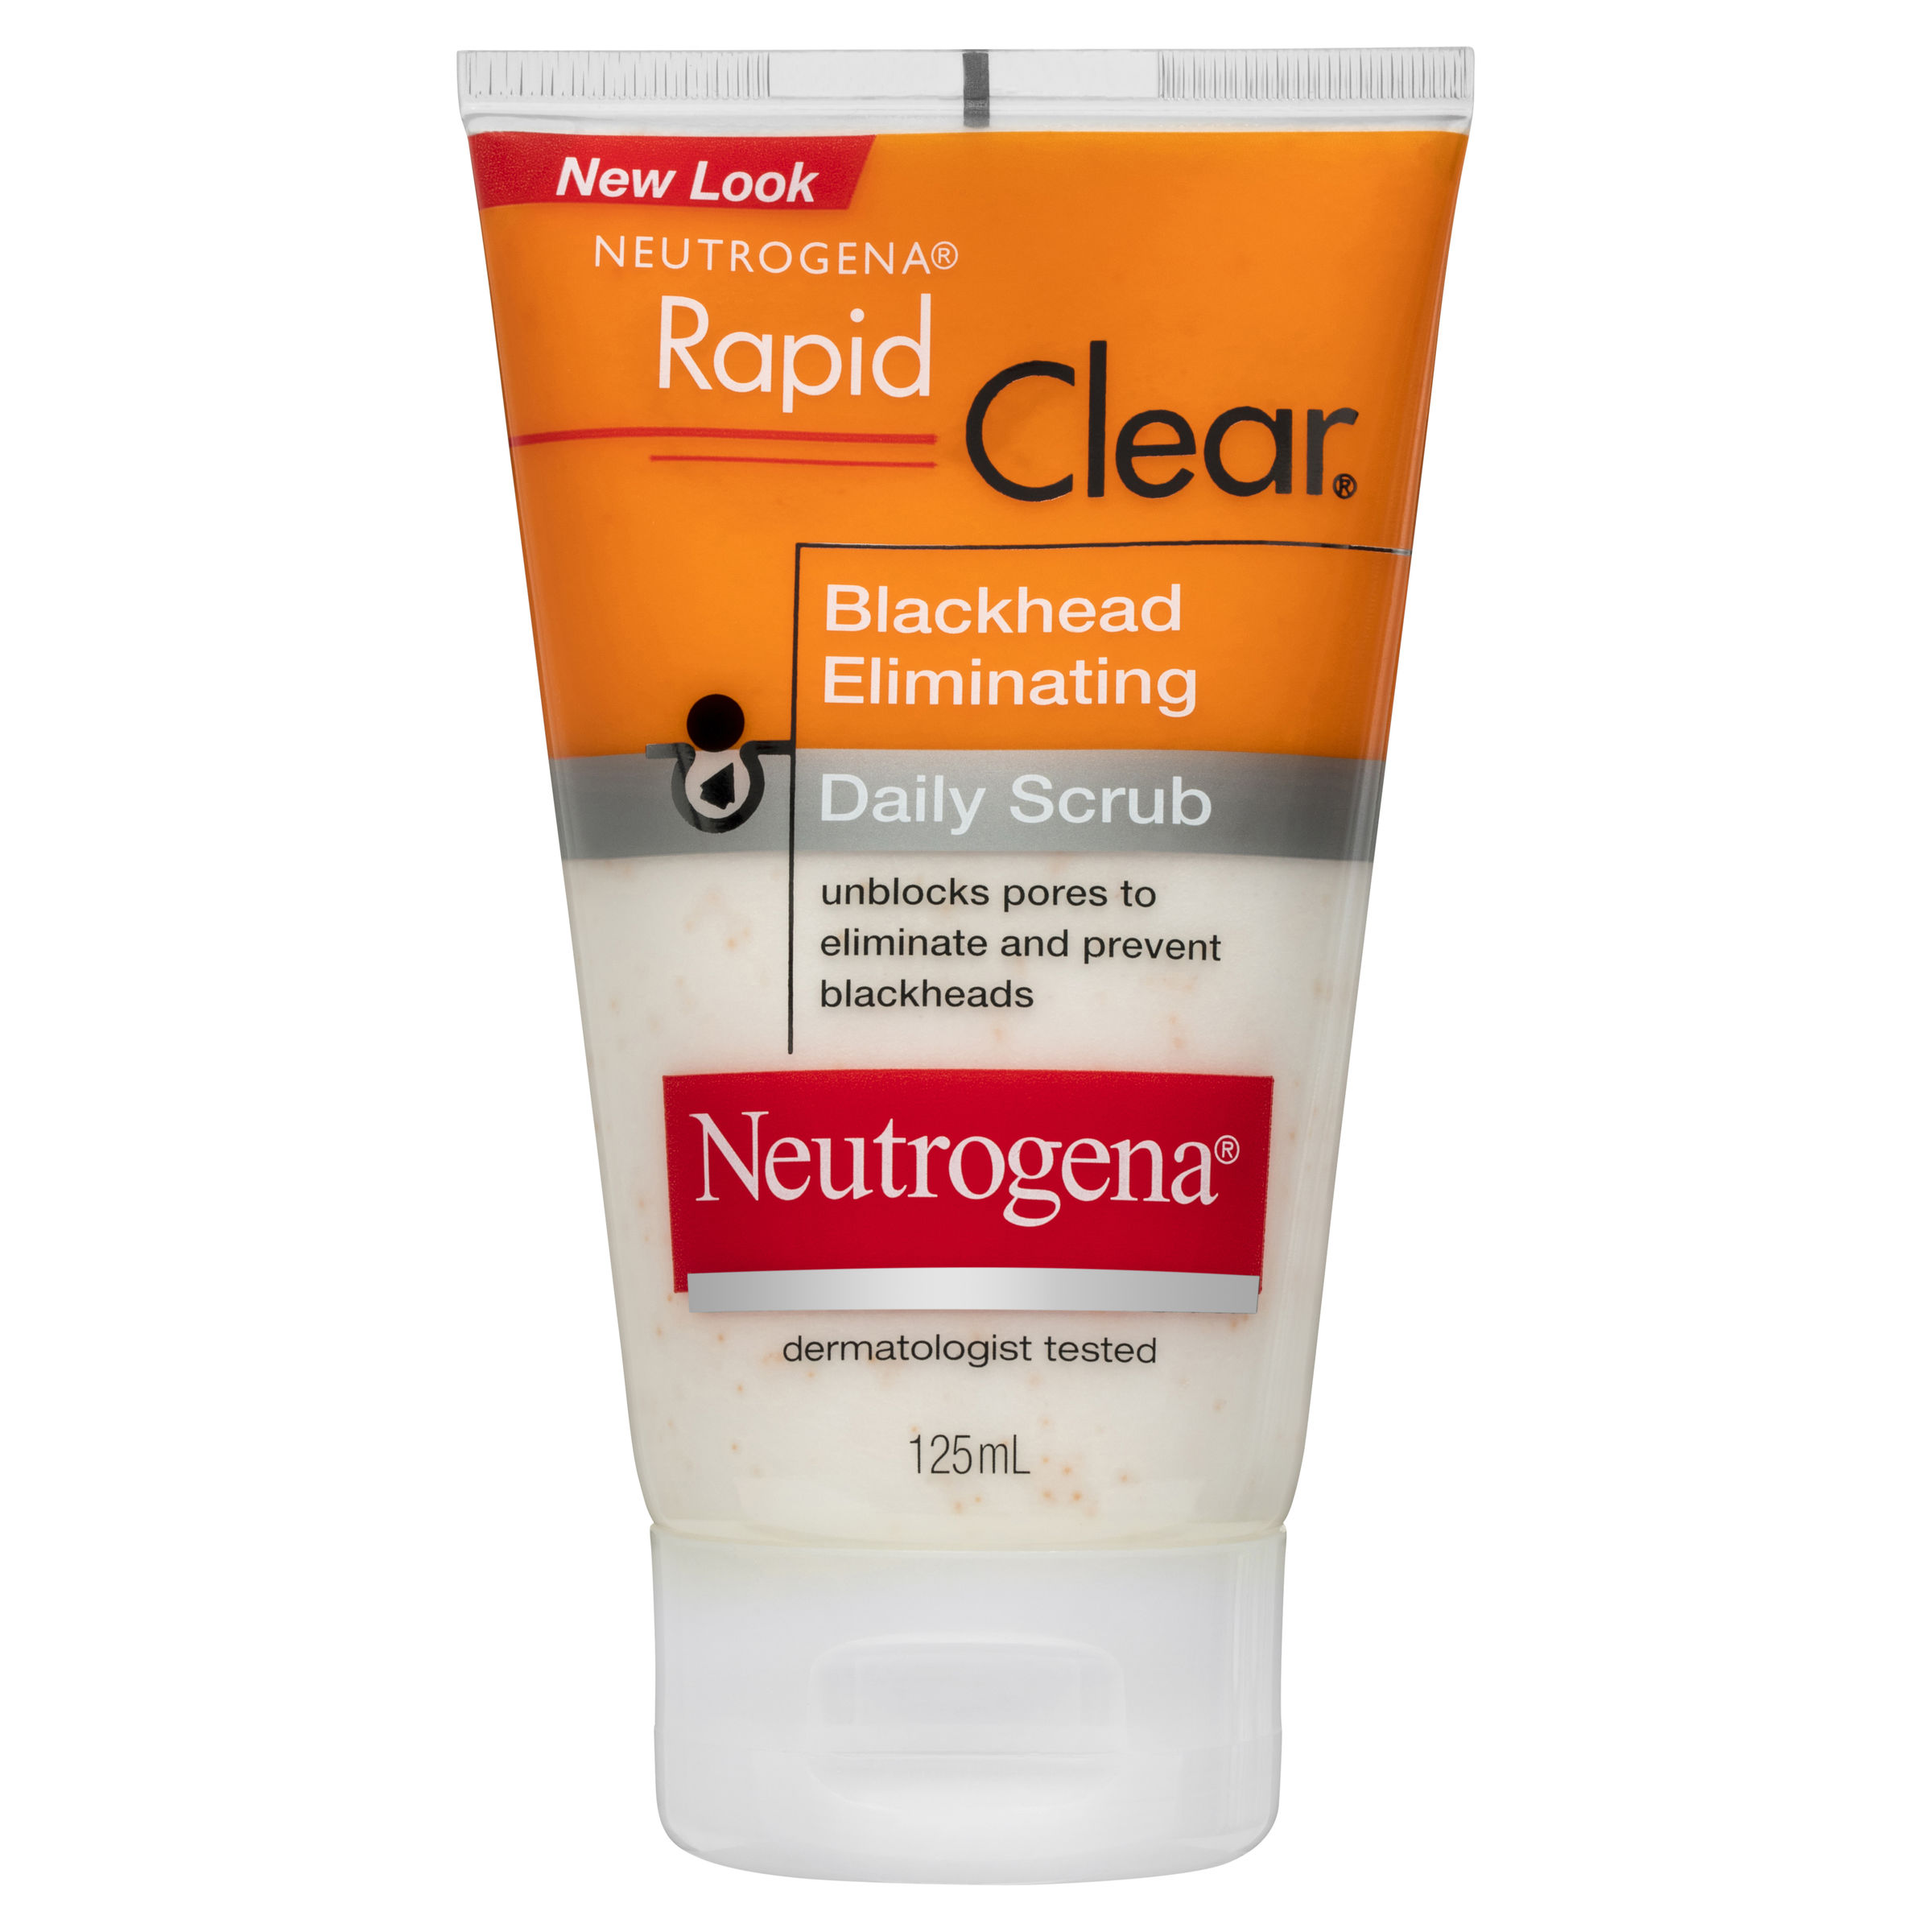 De clear. Neutrogena Rapid Clear. Neutrogena Blackhead eliminating. Neutrogena Black head 200 ml. Clear.